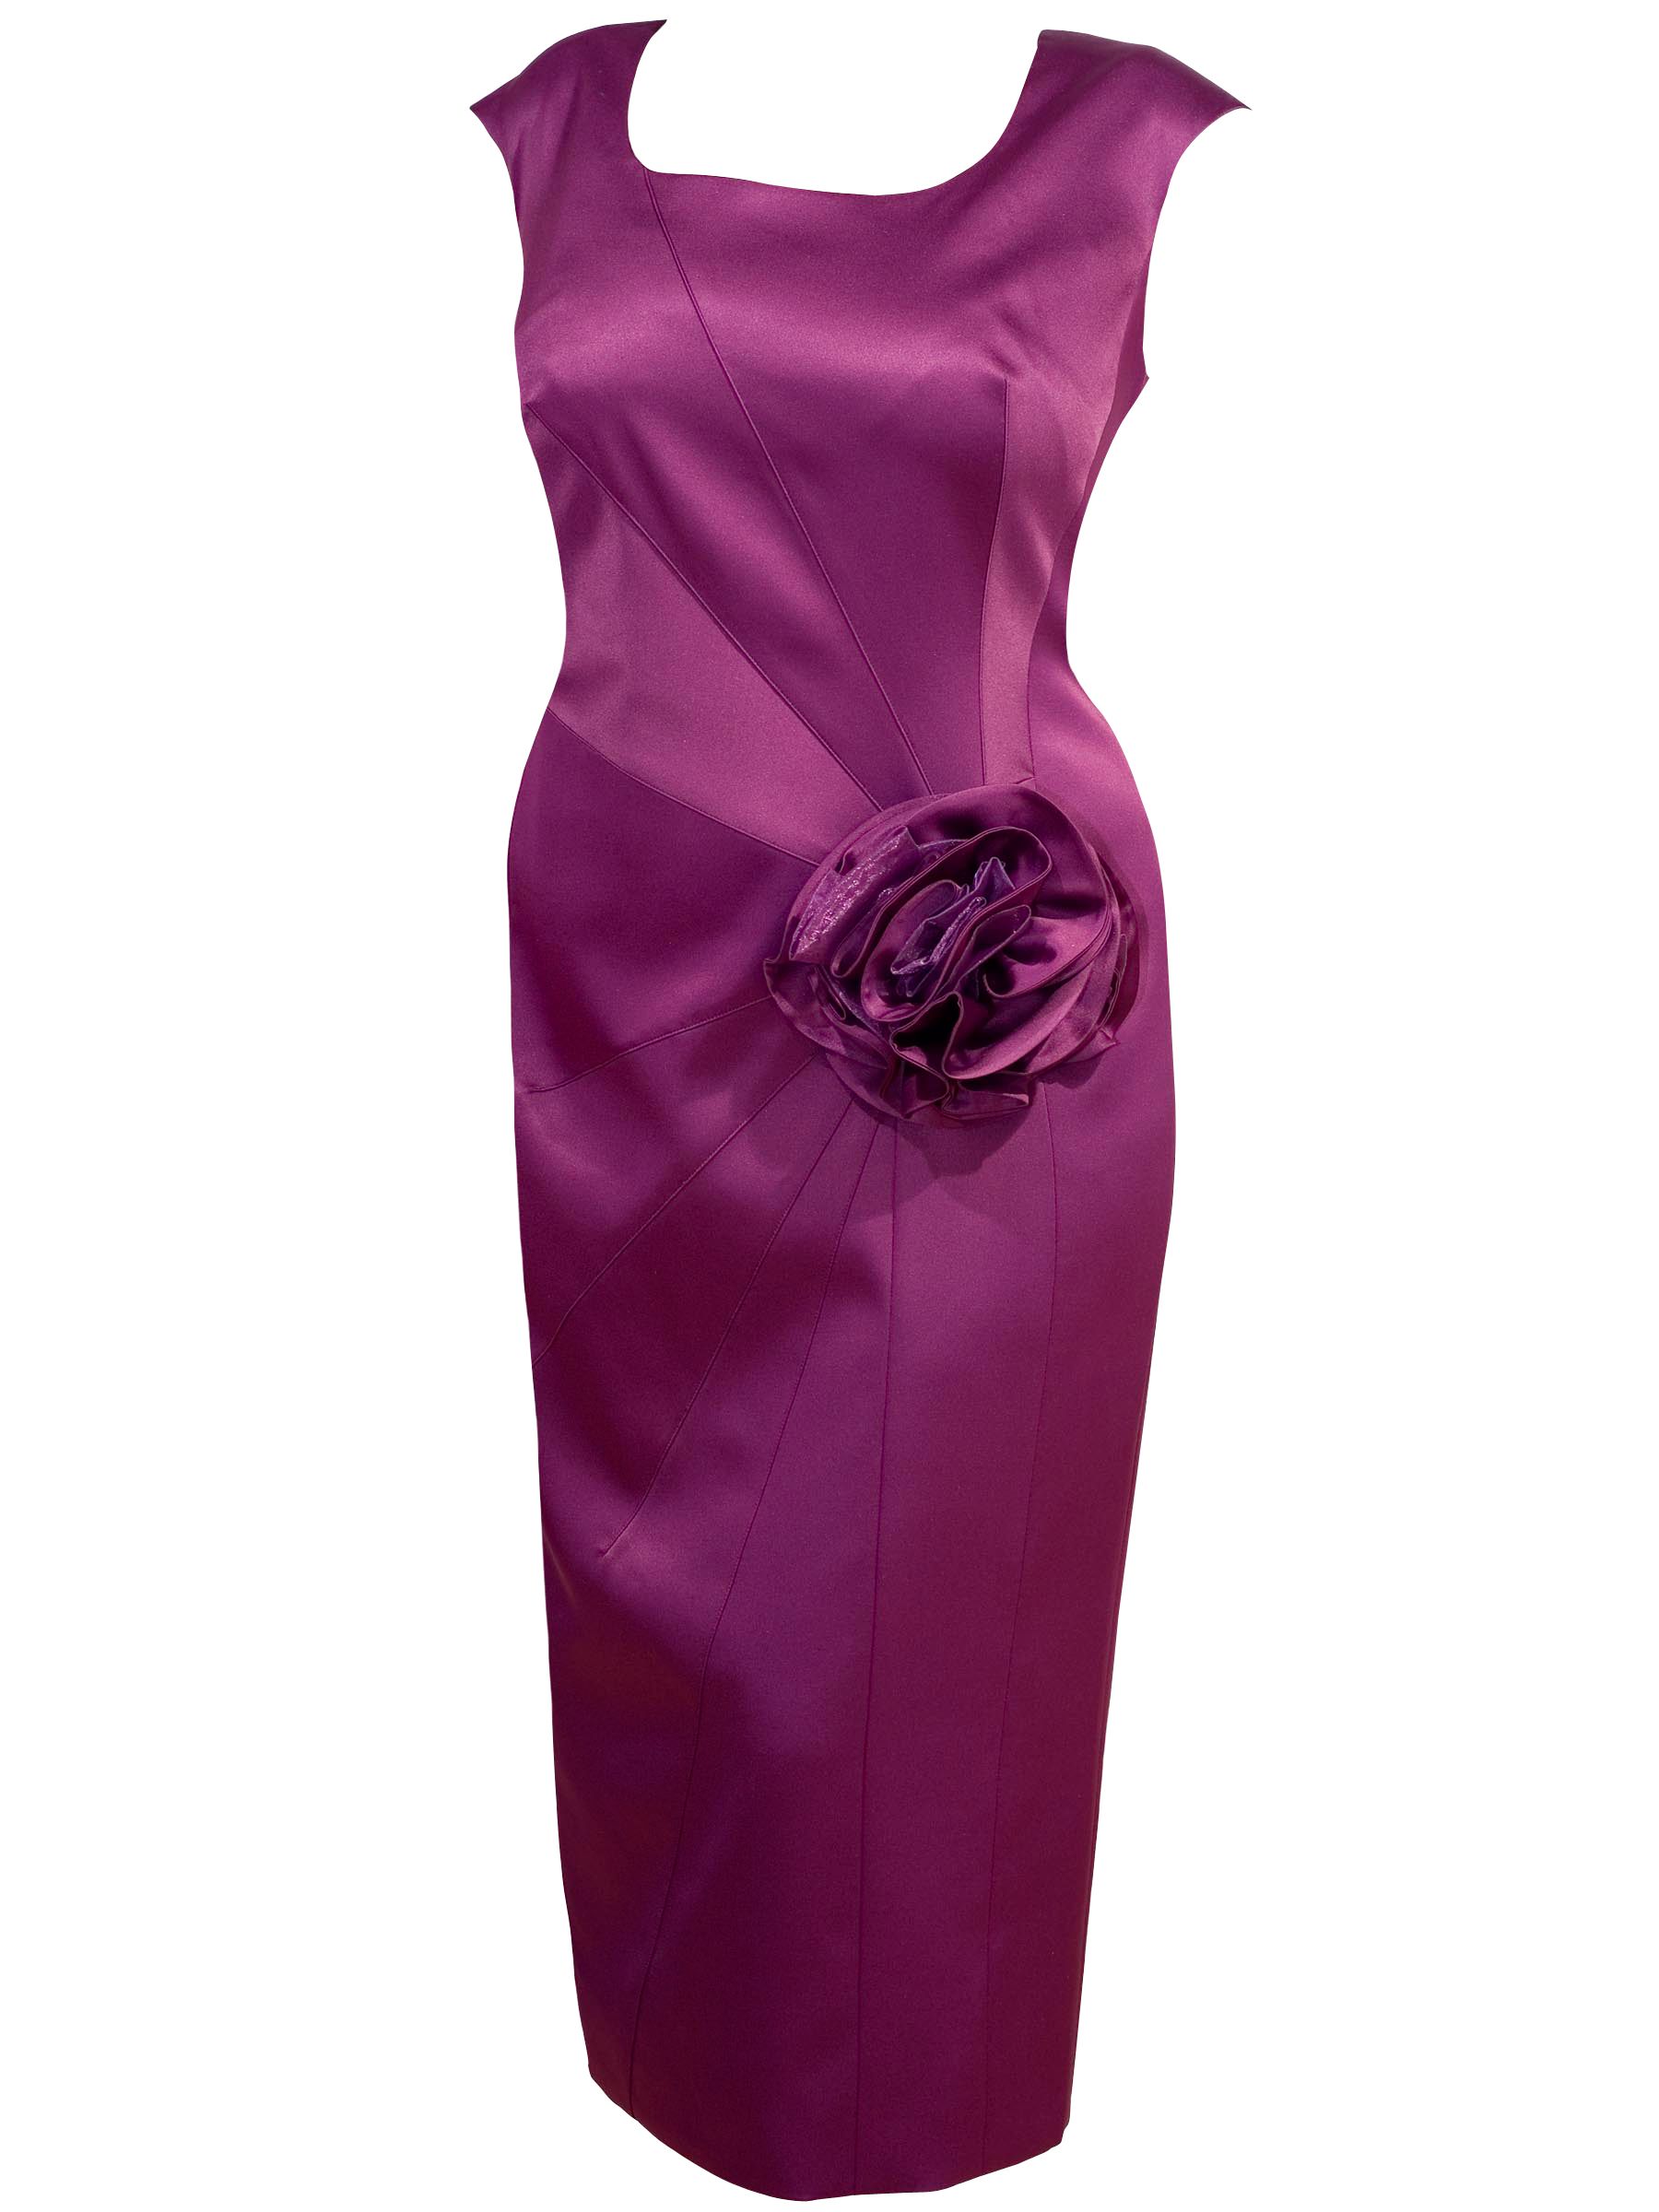 Chesca Corsage Trim Dress, Hot Pink at John Lewis